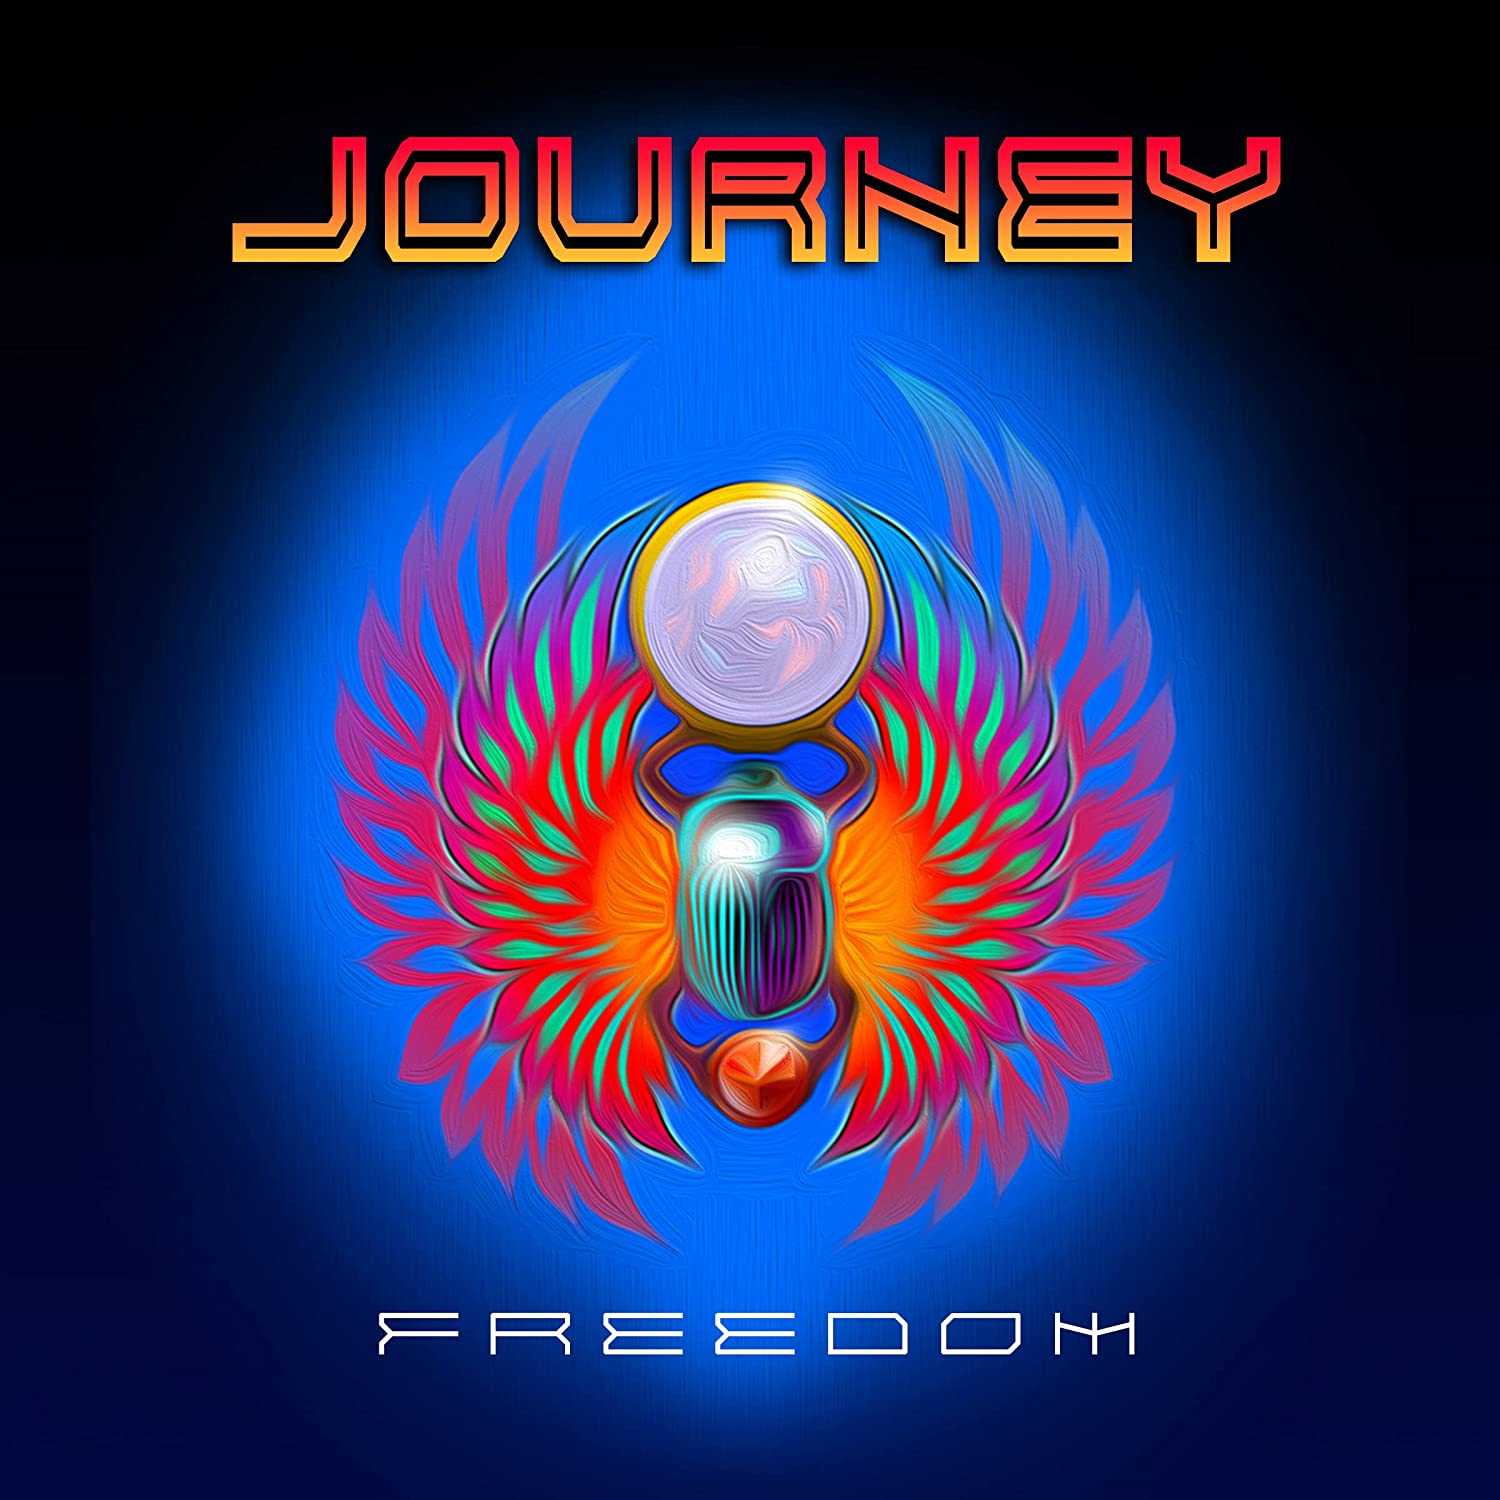 Journey ‘Freedom’ album artwork